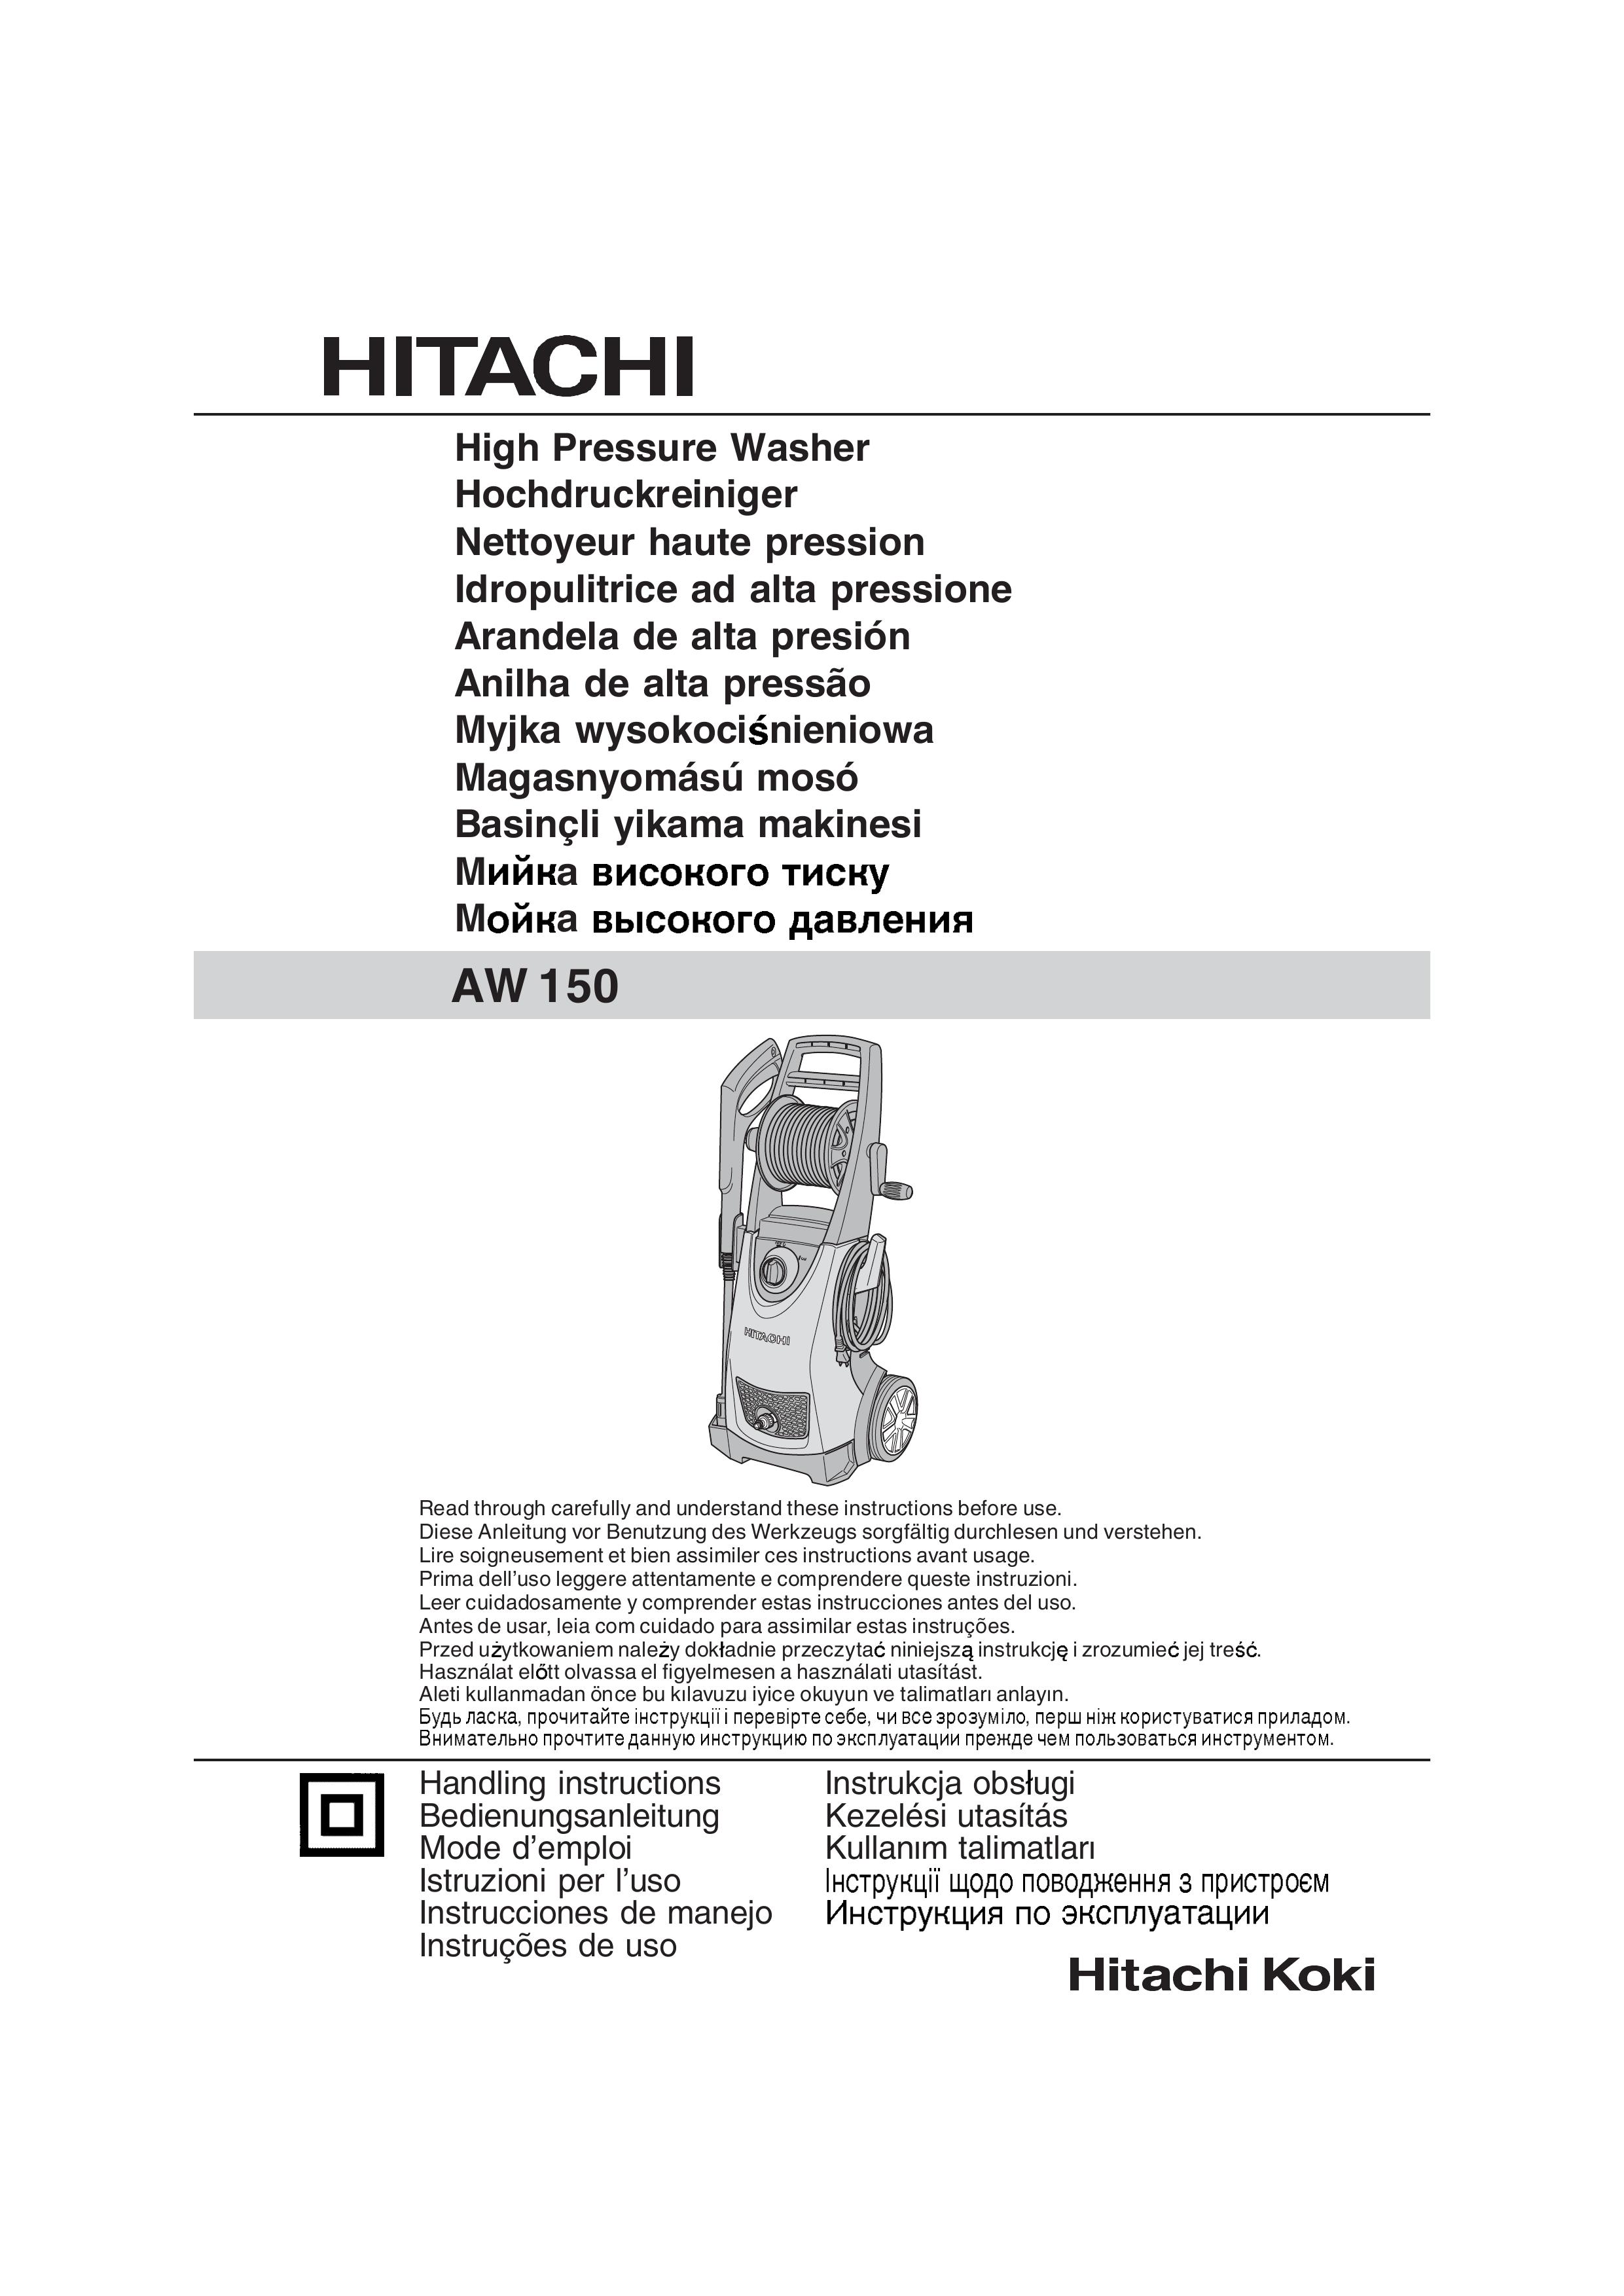 Hitachi Koki USA AW 150 Pressure Washer User Manual